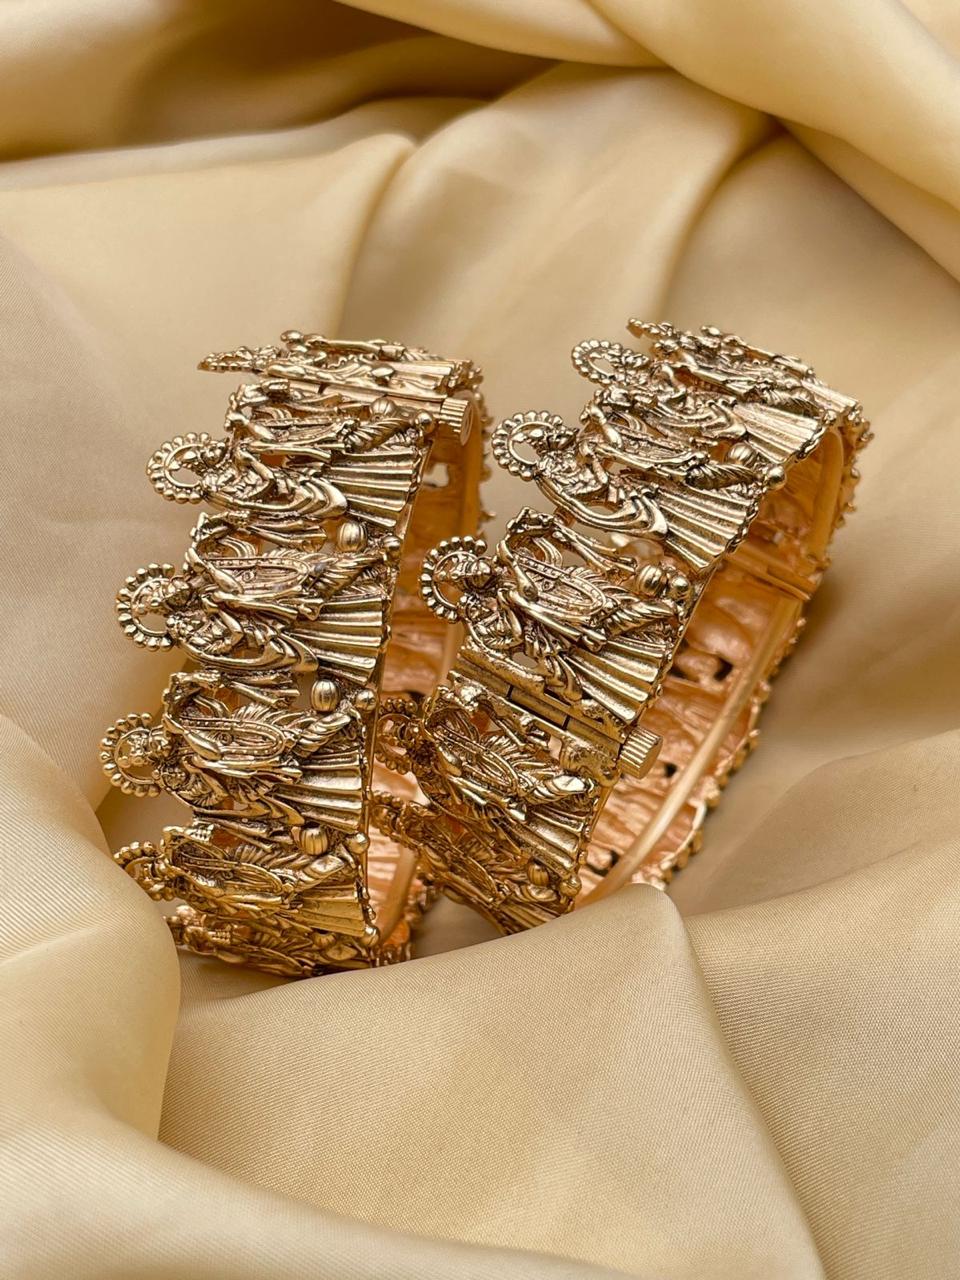 Bal Krishna With Diamond Artisanal Design Gold Plated Bracelet For Men -  Style B134 at Rs 2500.00 | Gold Plated Bracelet | ID: 2850154177348